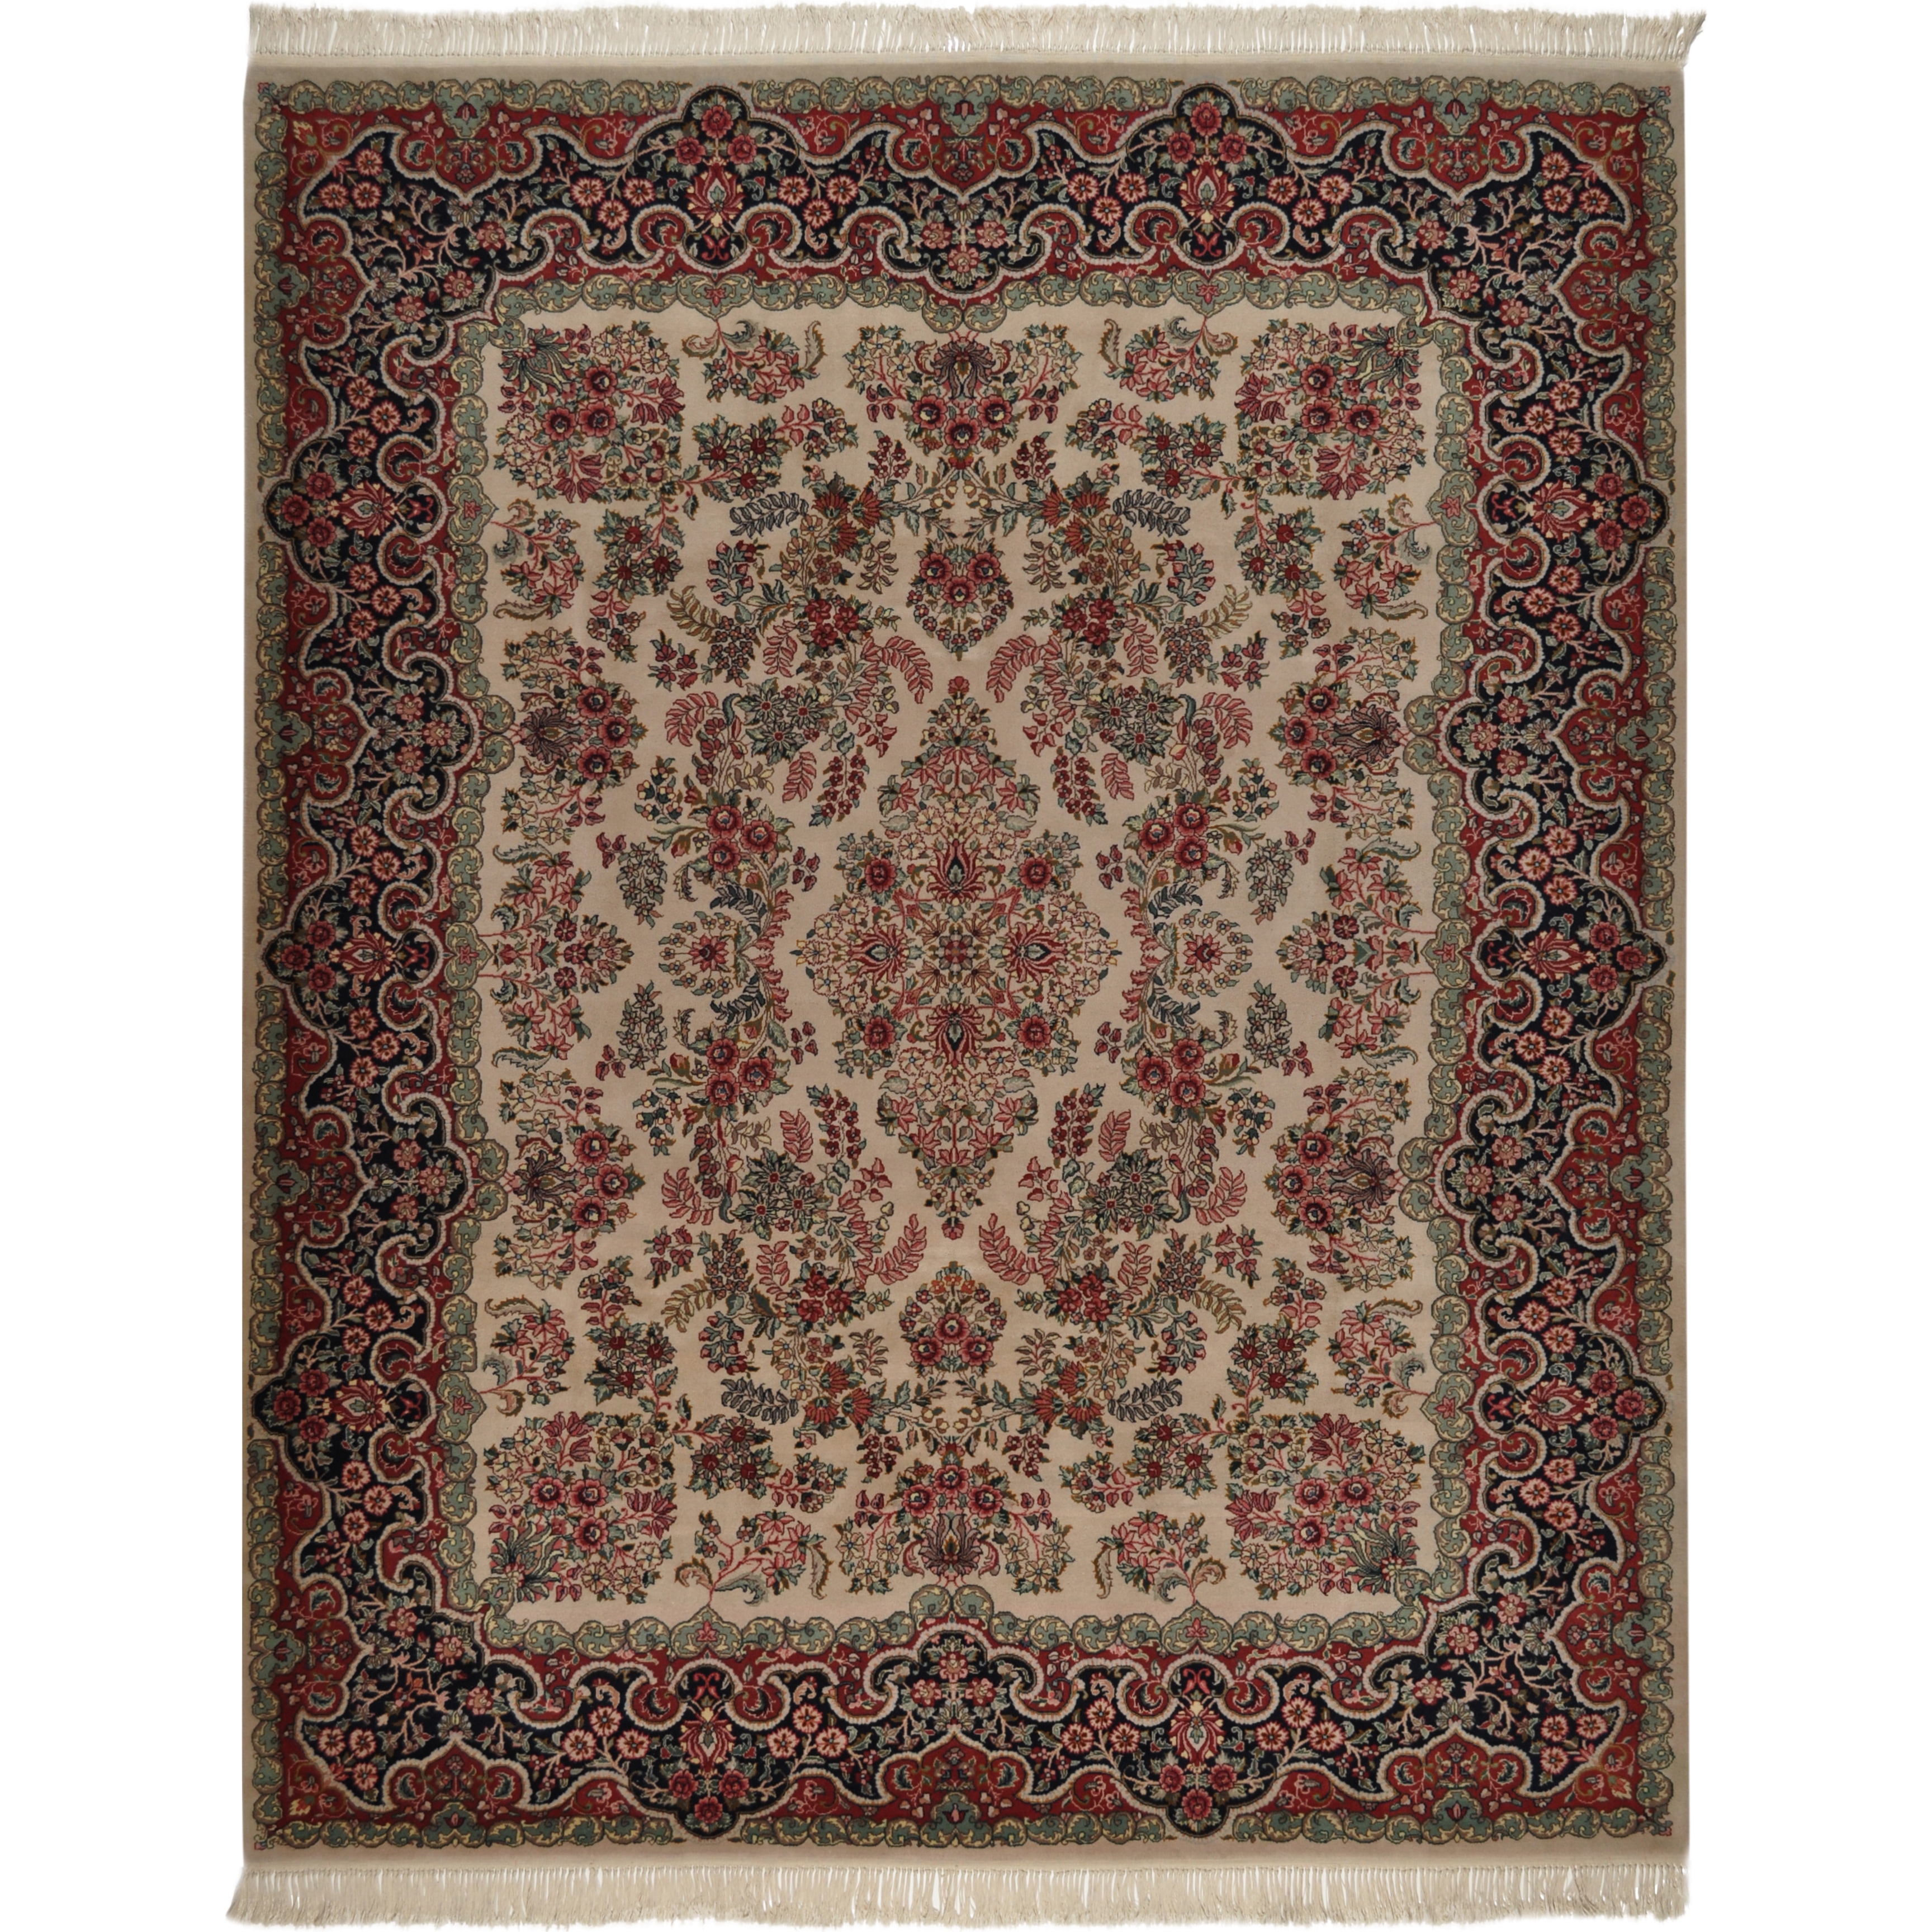 Hand knotted Tabriz Wool/ Silk Area Rug (8 X 10)